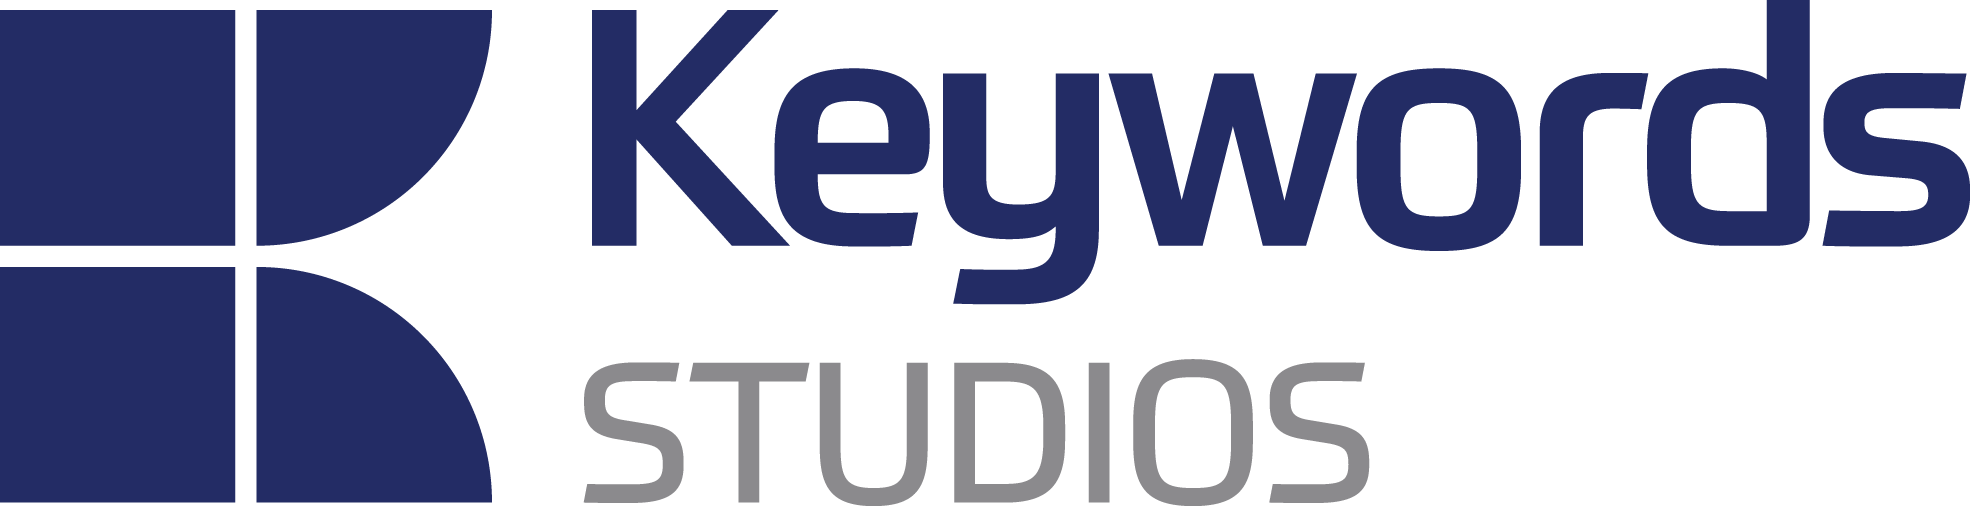 keywords studios